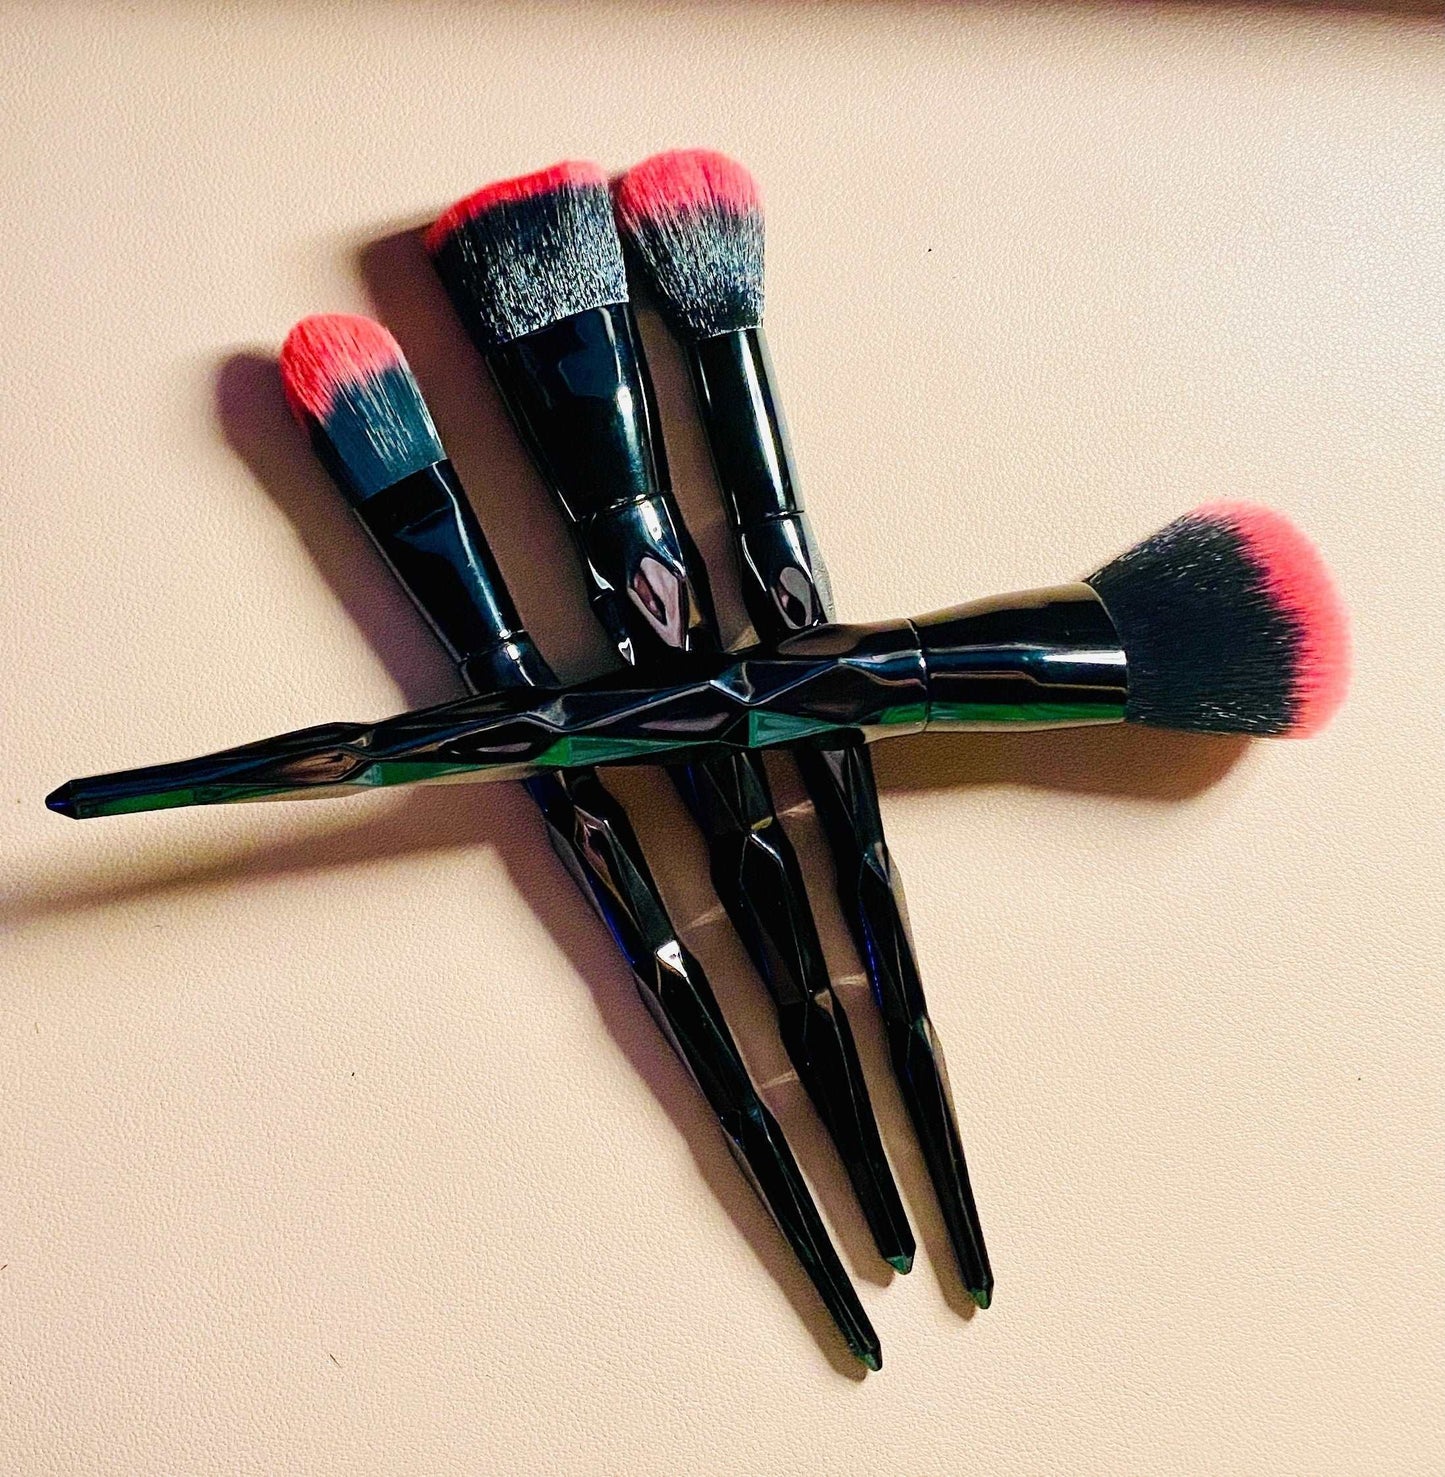 Black Obsidian Ombre Makeup Brush Set Makeup Brushes Pink Sweetheart